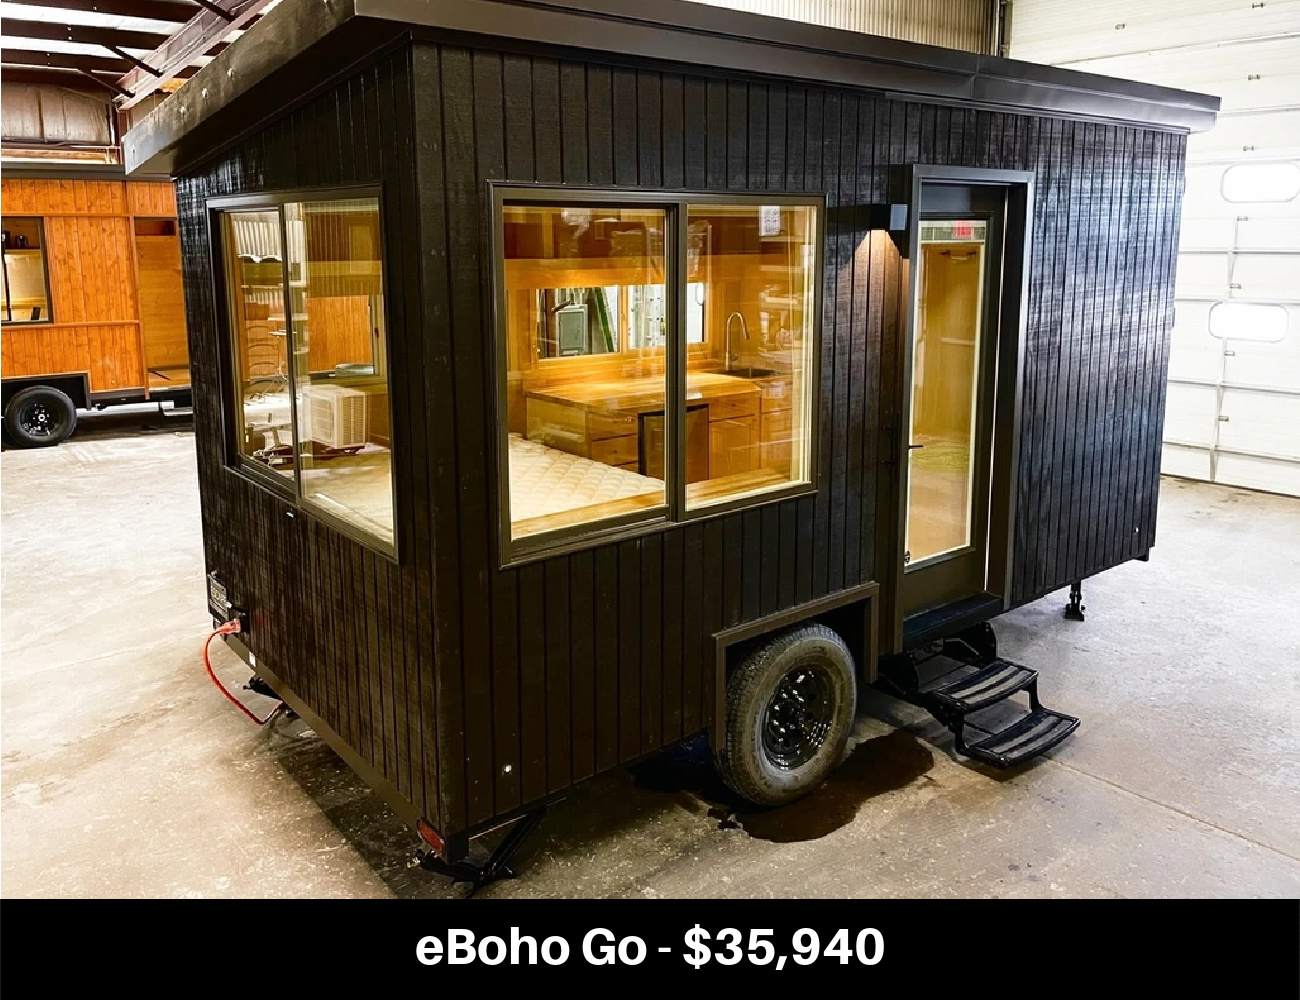 eBoho Go - $35,940